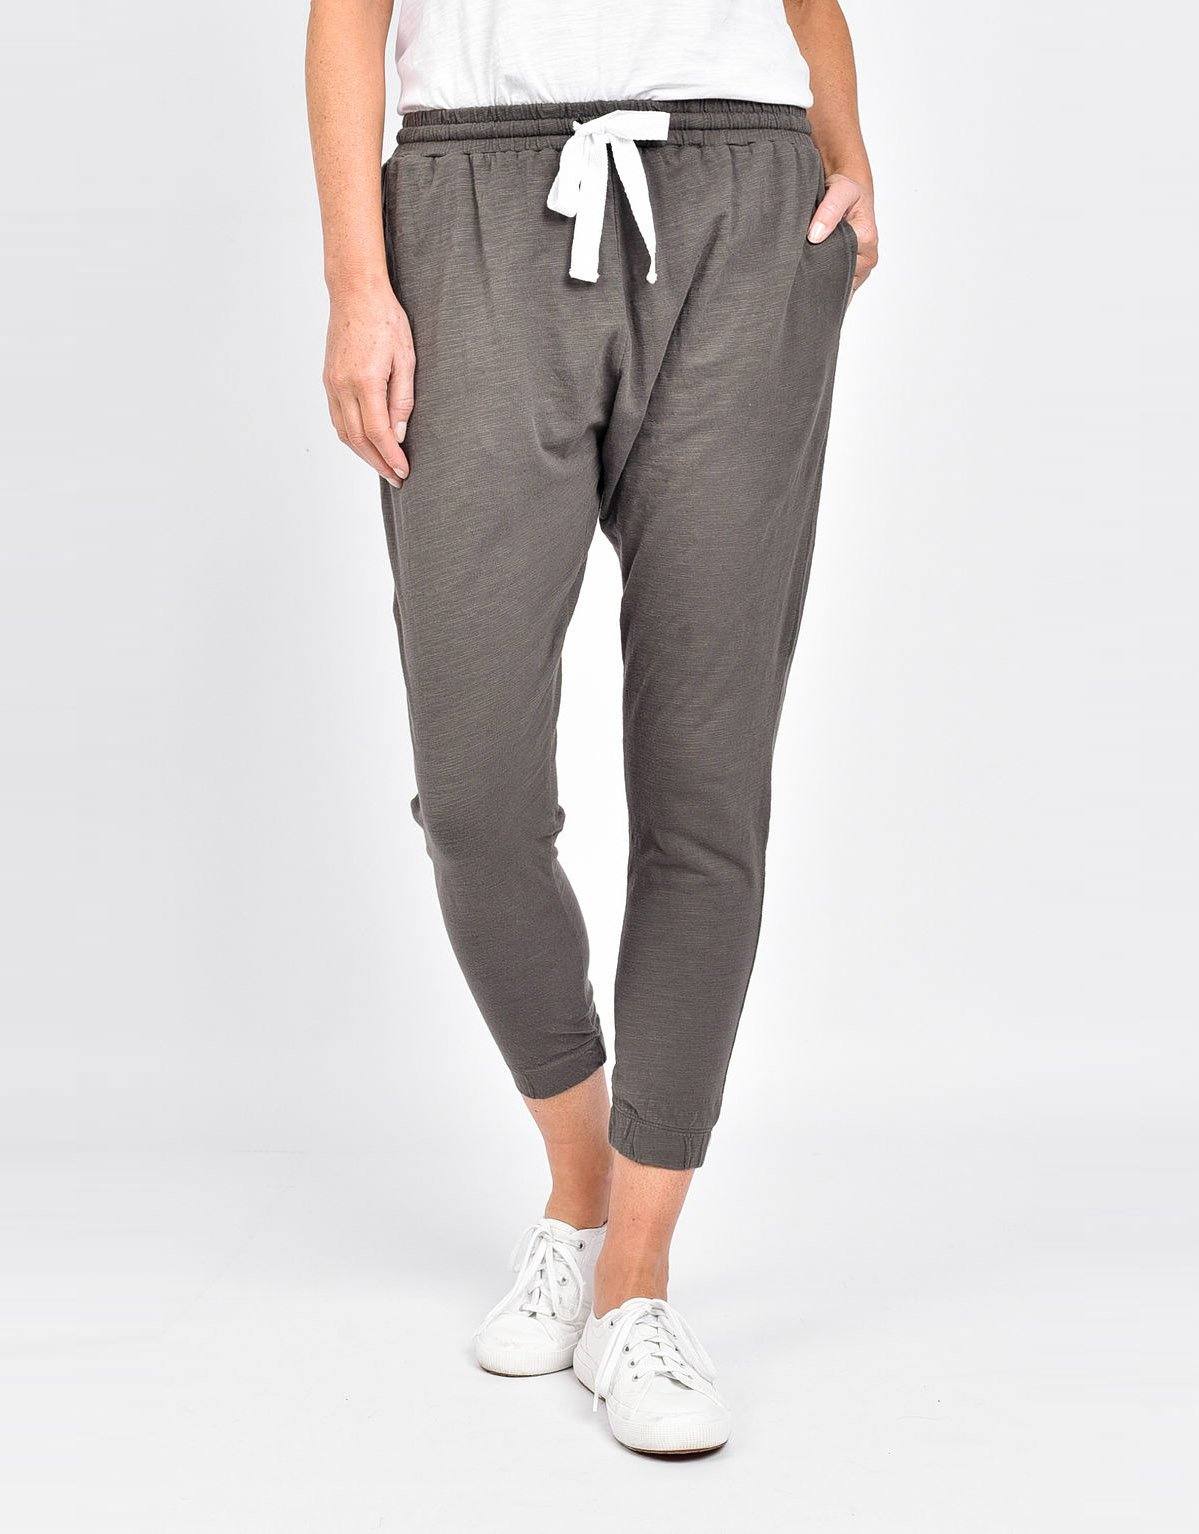 Bottoms | Women's Pants, Jeans & Skirts | White & Co. - White & Co